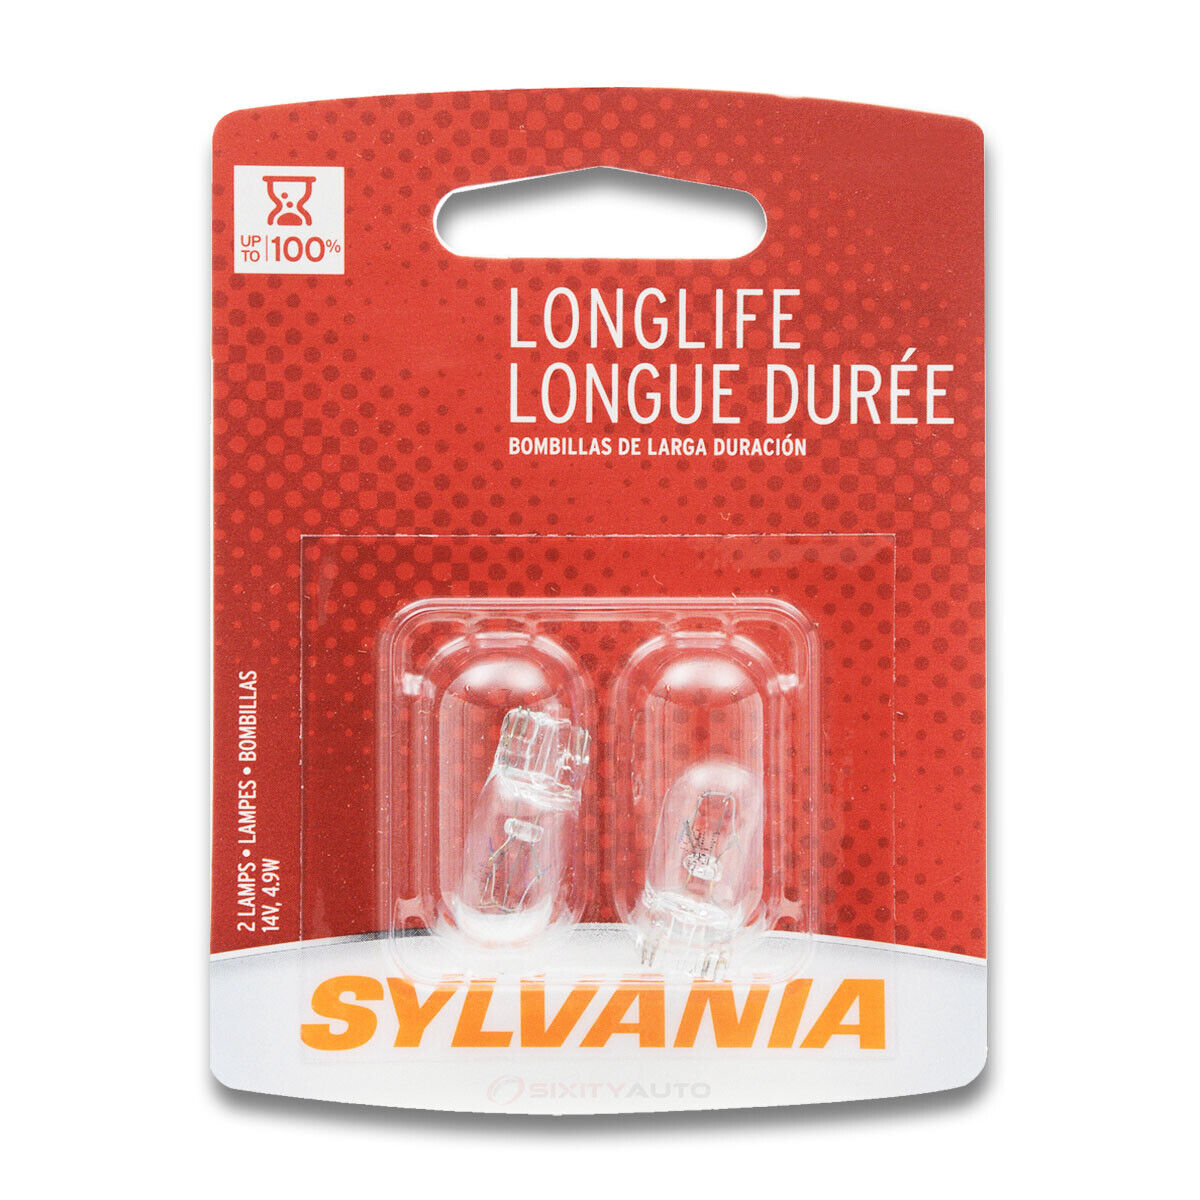 Sylvania Long Life Inner Tail Light Bulb for Lexus ES330 LS430 ES300 dt